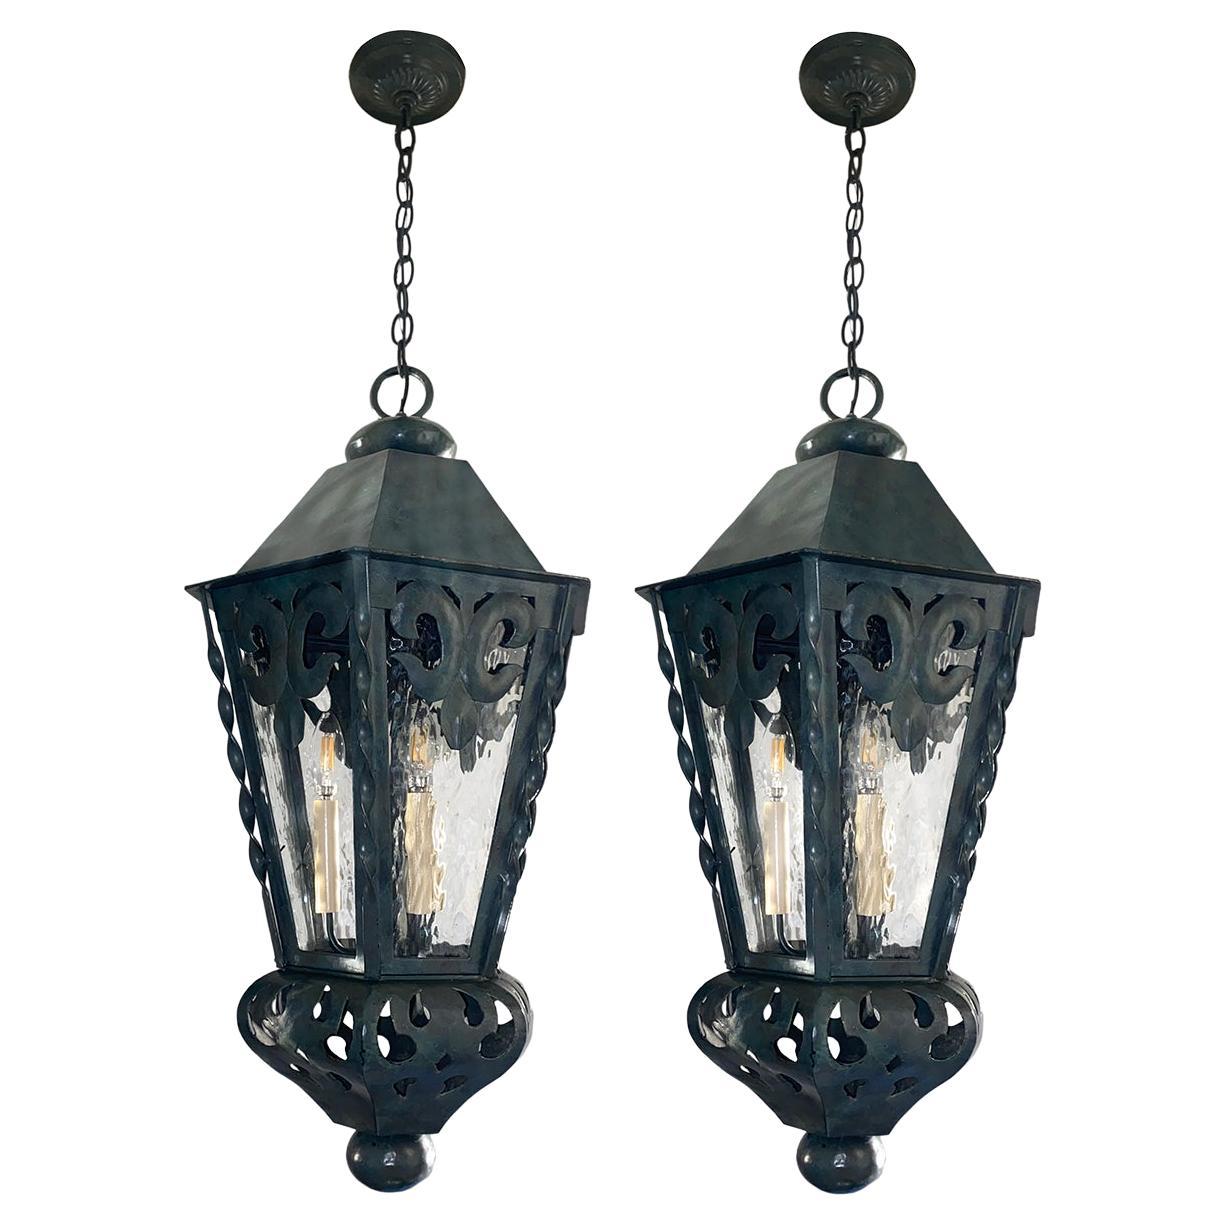 A set of four circa 1920's English metal lanterns with verdigris patina. Sold individually.

Measurements:
Minimum drop: 32